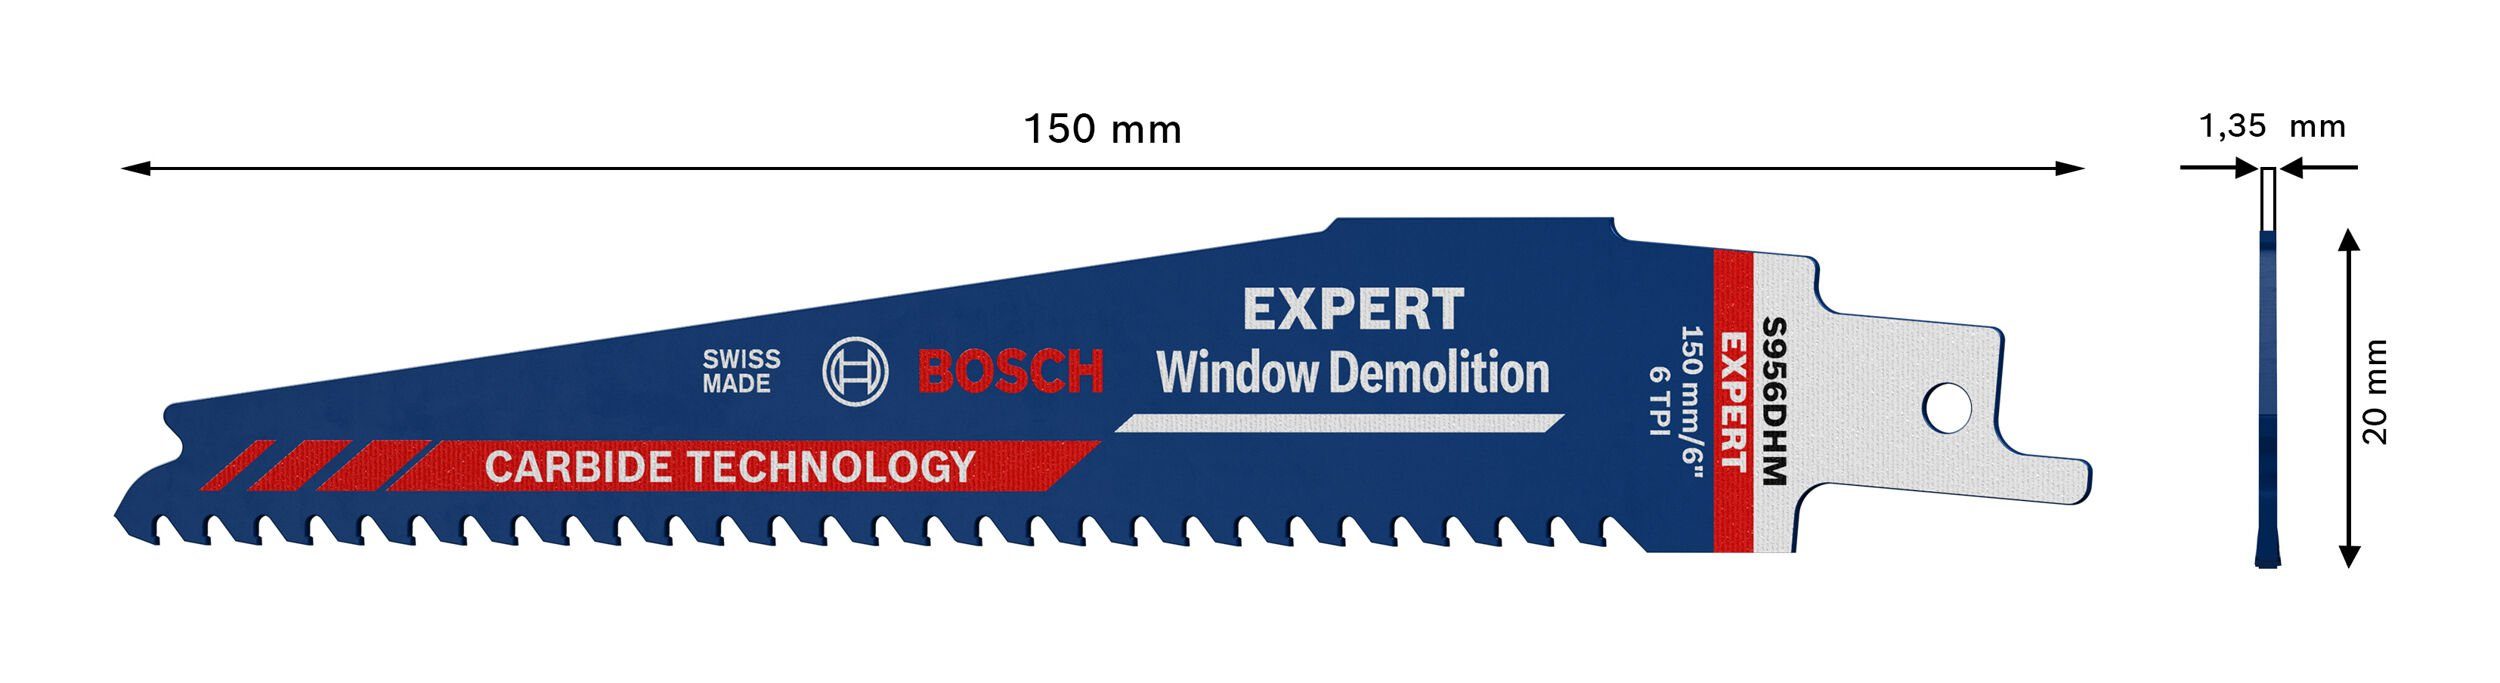 Expert Window DHM Demolition, Endurance for BOSCH Demolition S 956 Säbelsägeblatt Expert Window Carbide